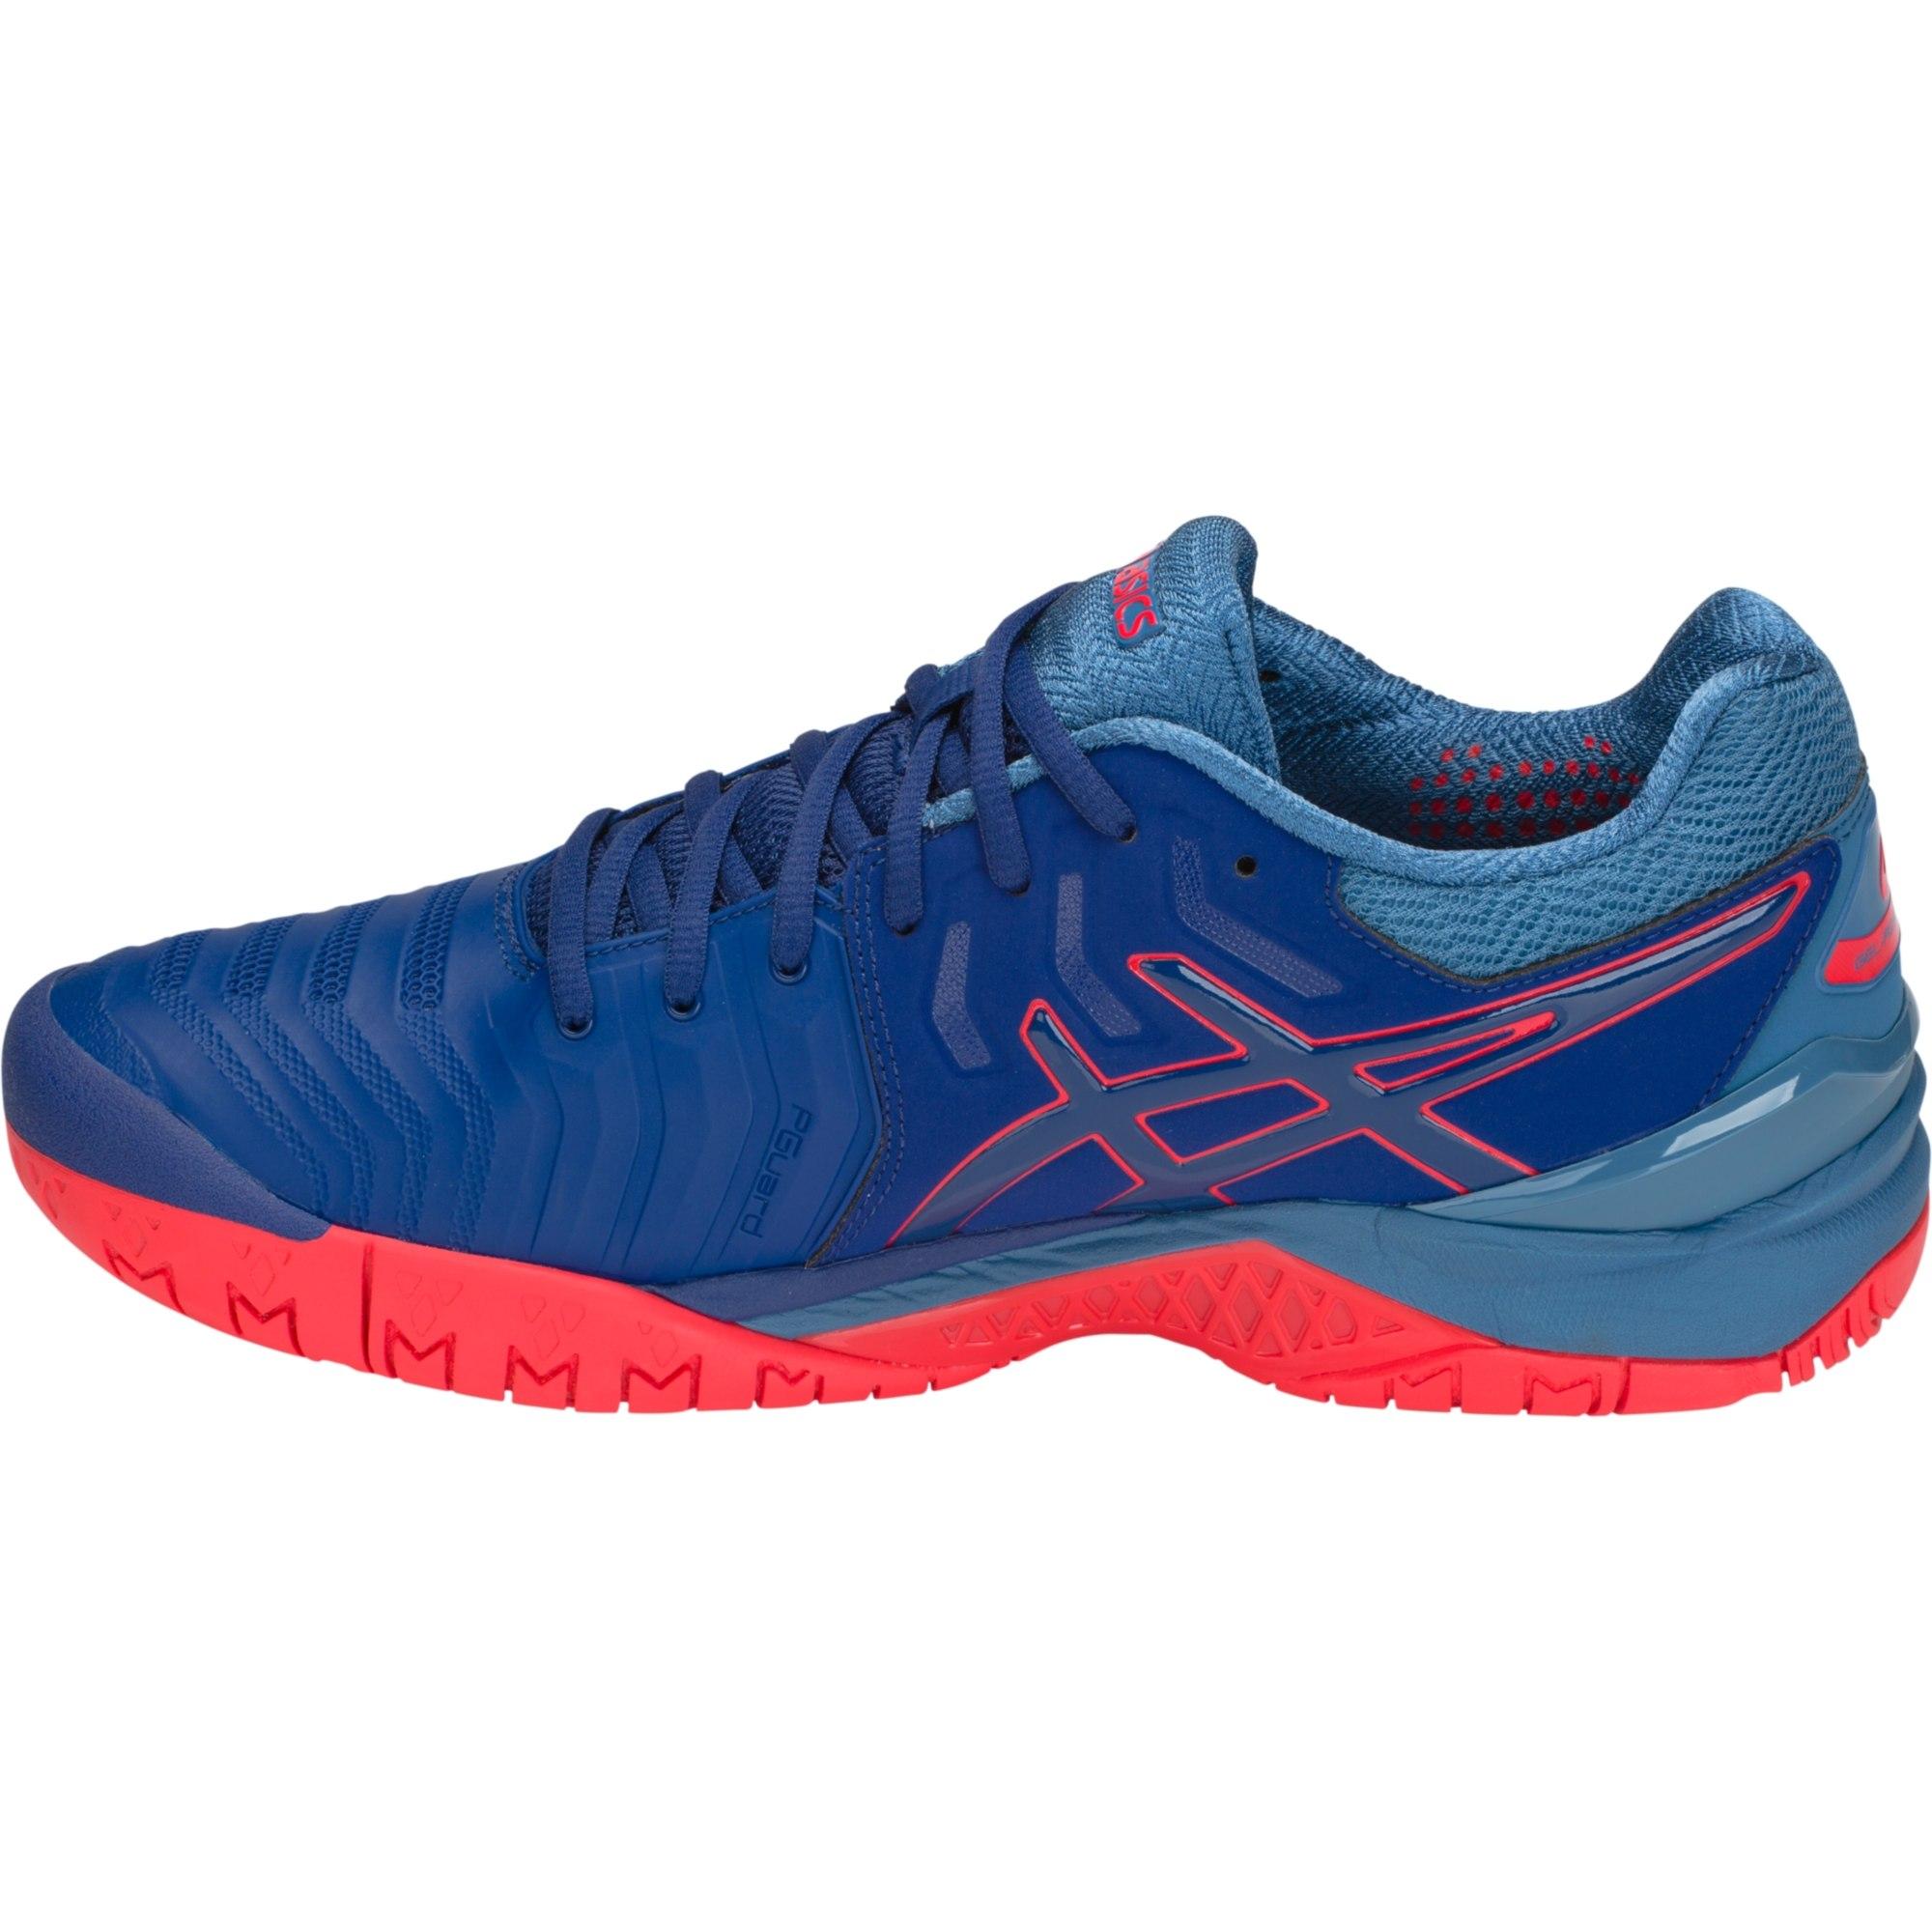 Asics Mens GEL-Resolution 7 Tennis Shoes - Blue Print/Red - nrd.kbic-nsn.gov